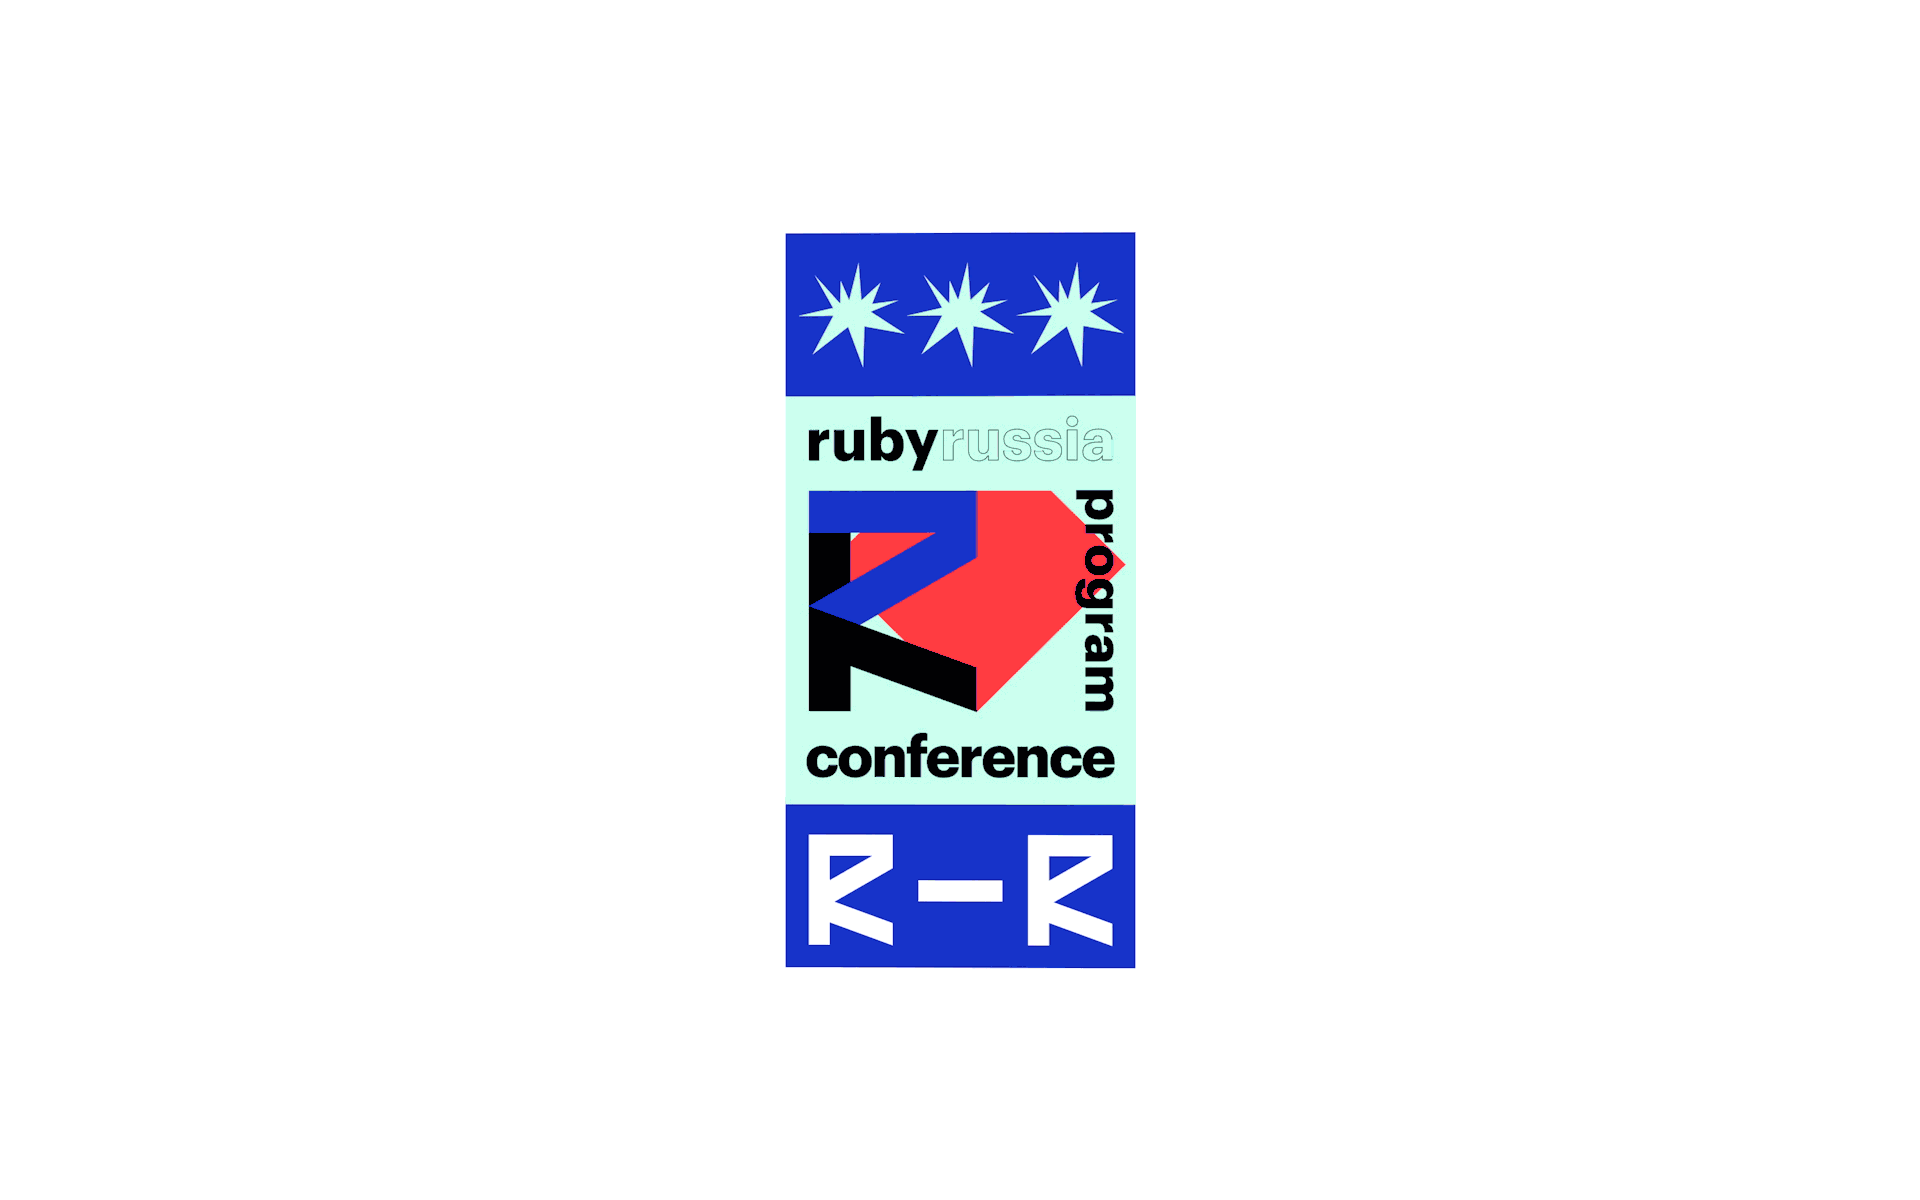 rubyrussia branding example